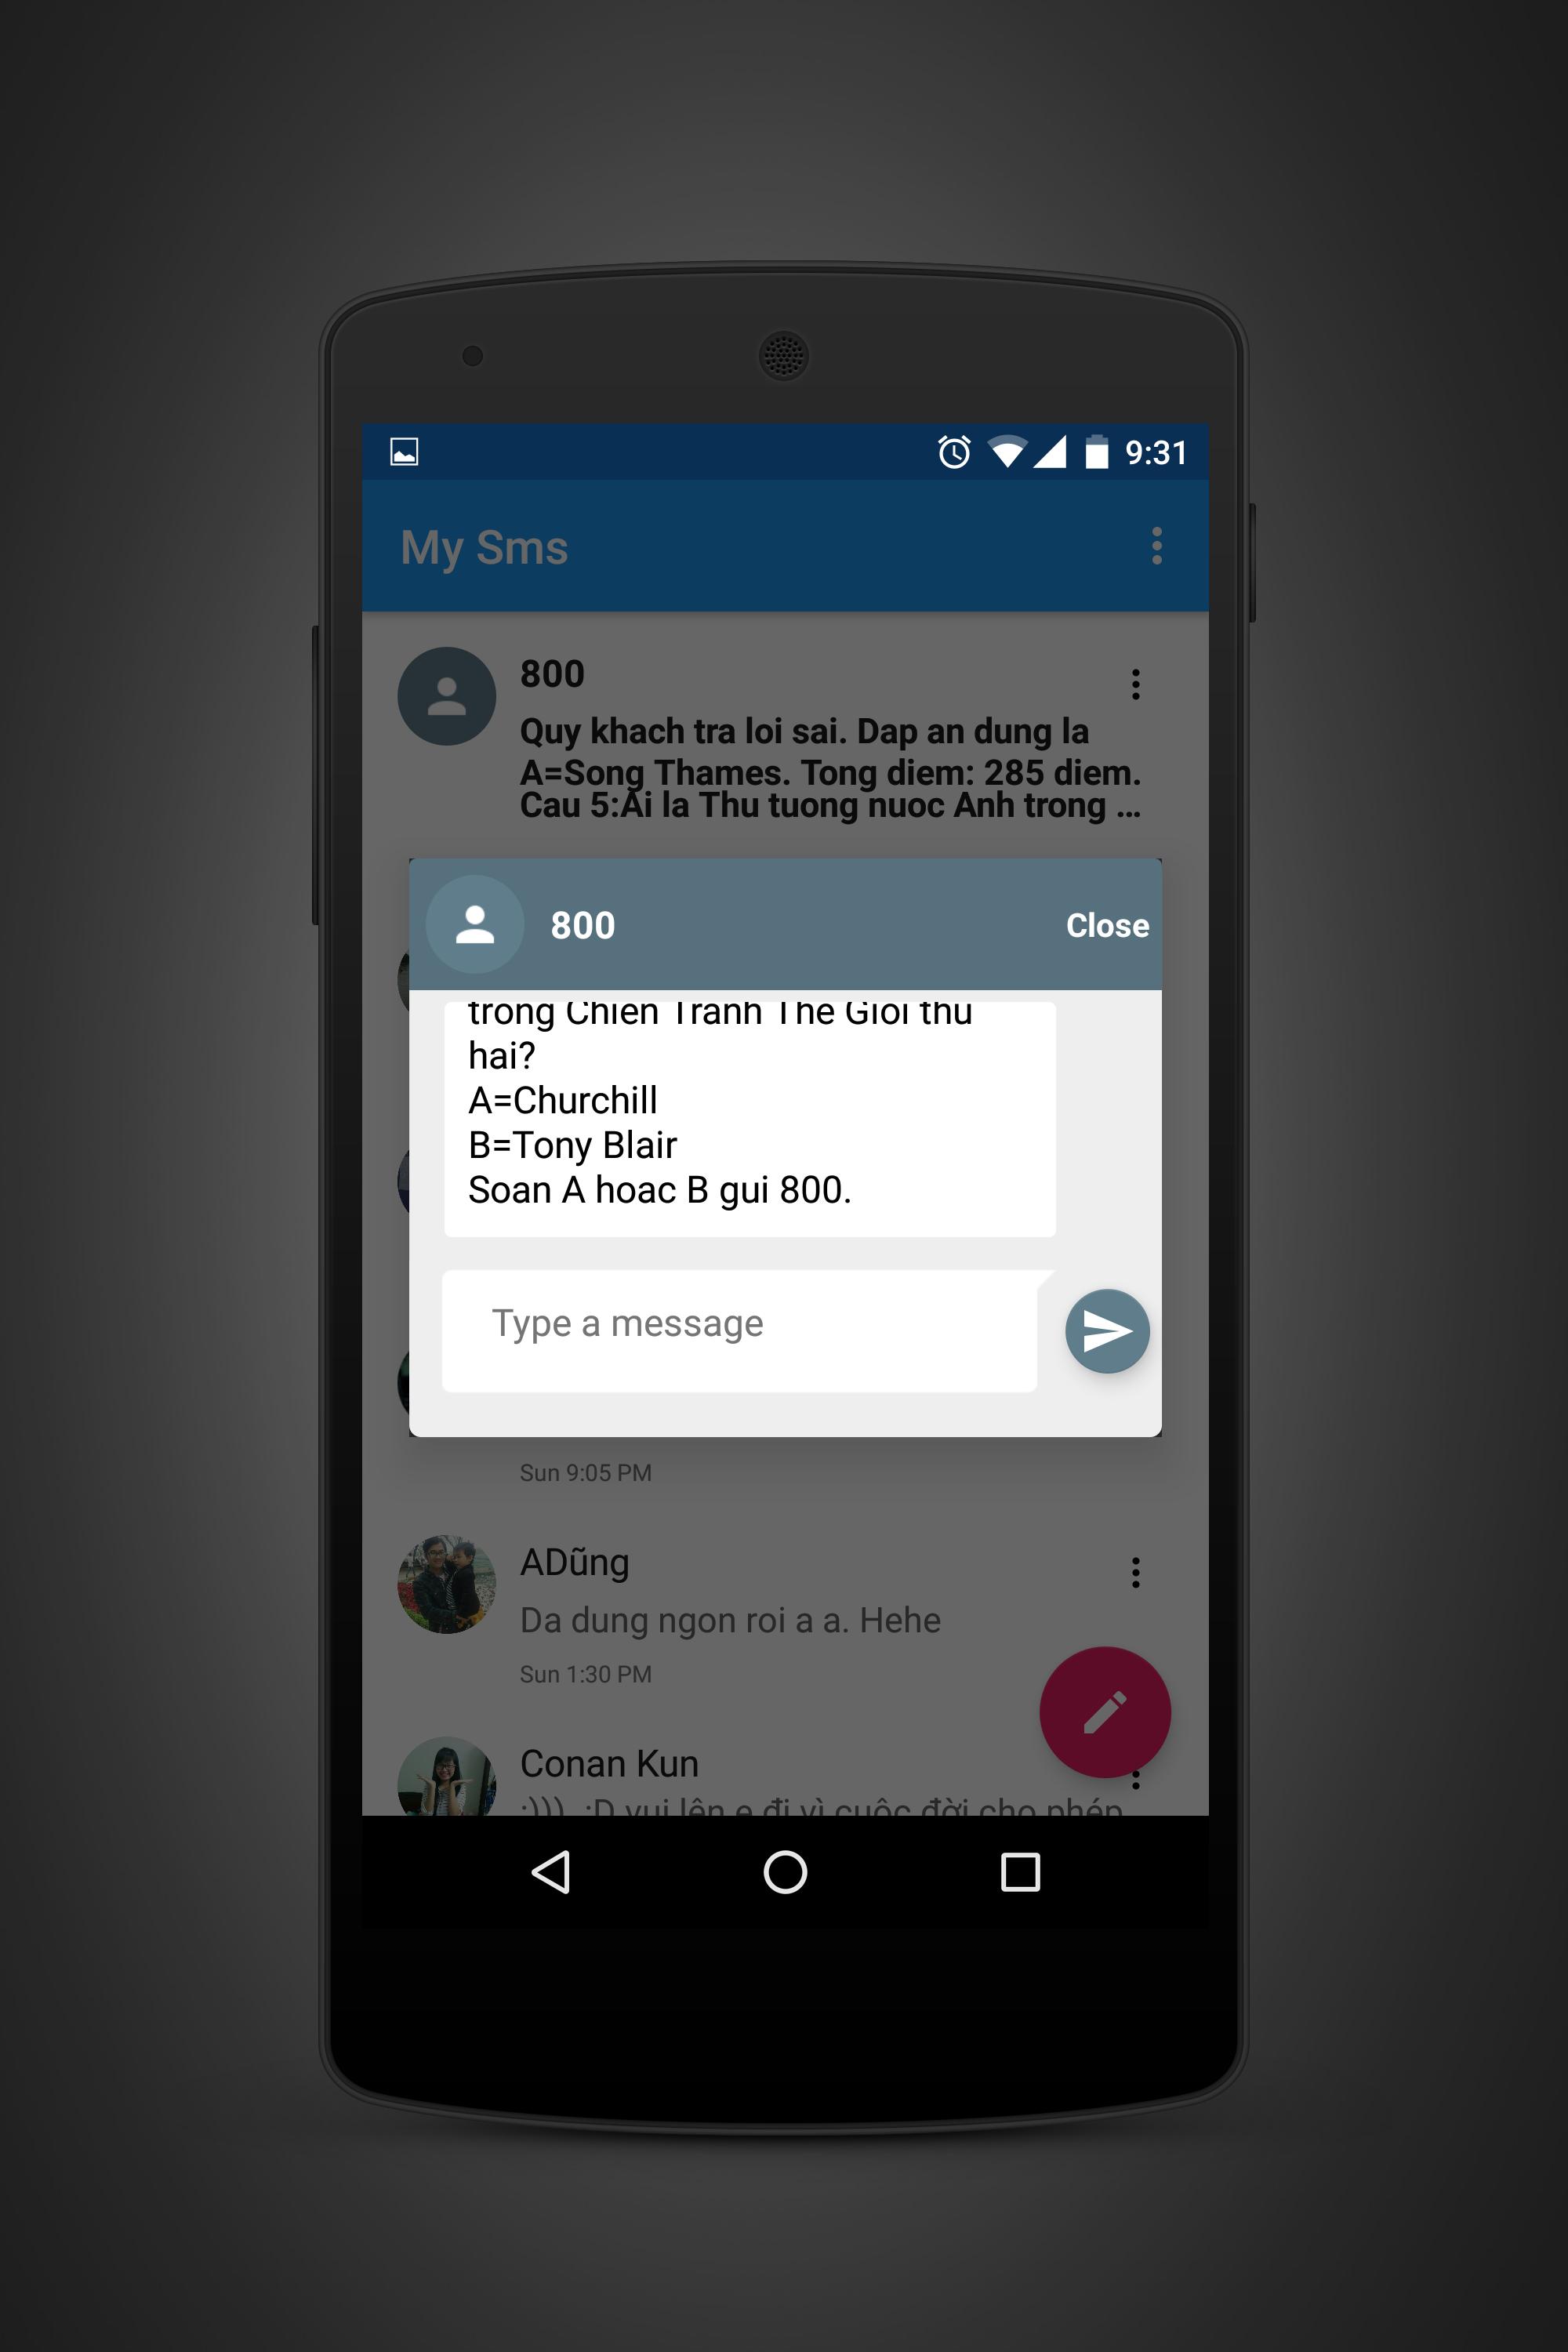 My sms. Смс. Андроид SMS. SMS Скриншот. Смс приложение для андроид.